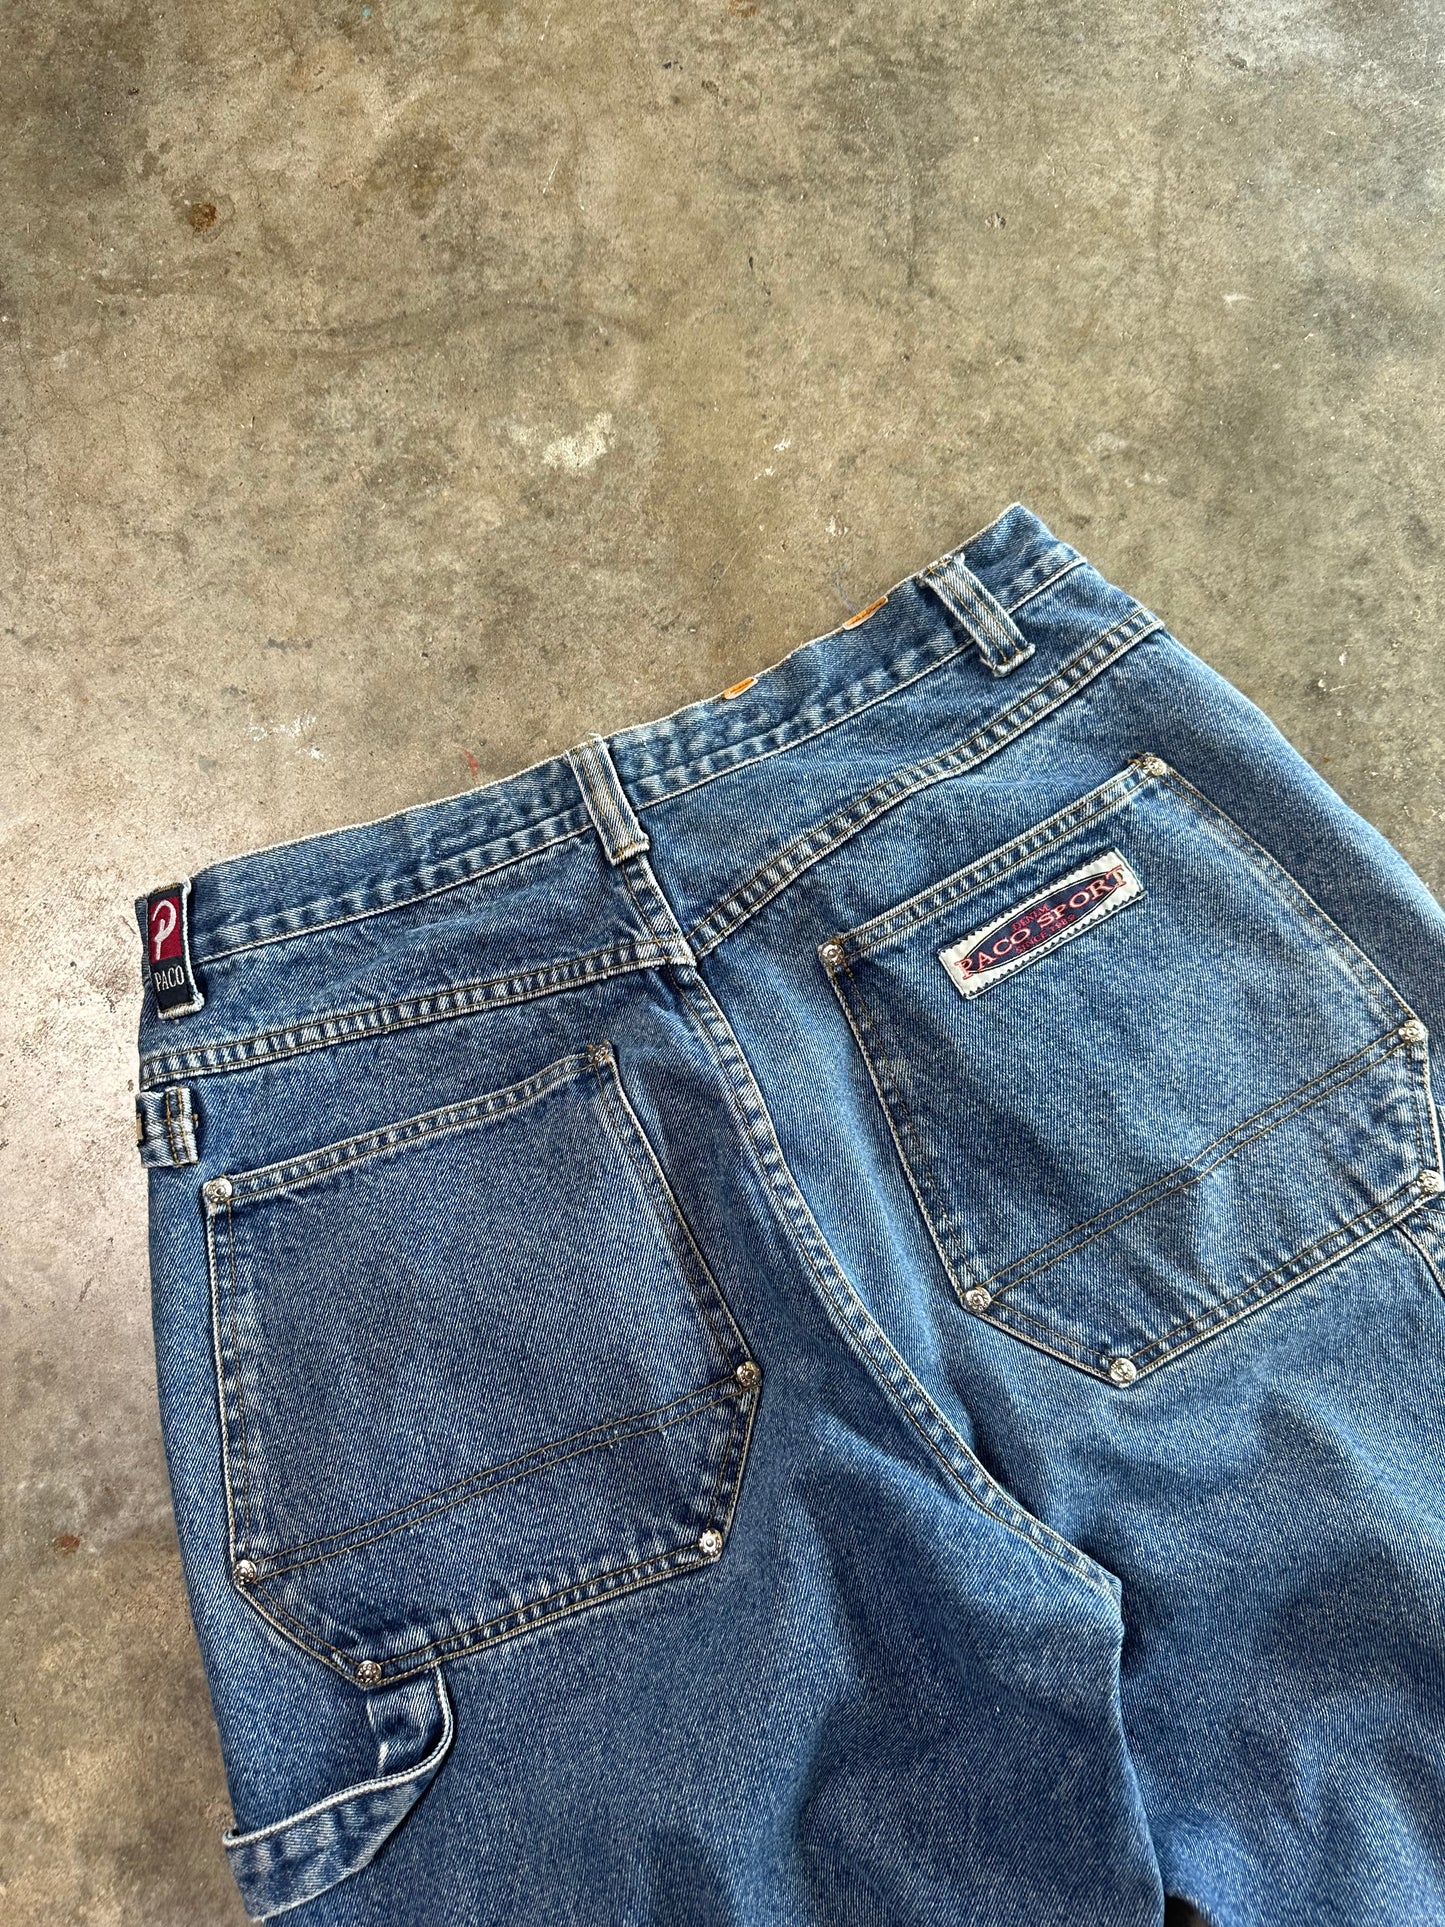 (36 x 30) Vintage 90s PACO Jeans